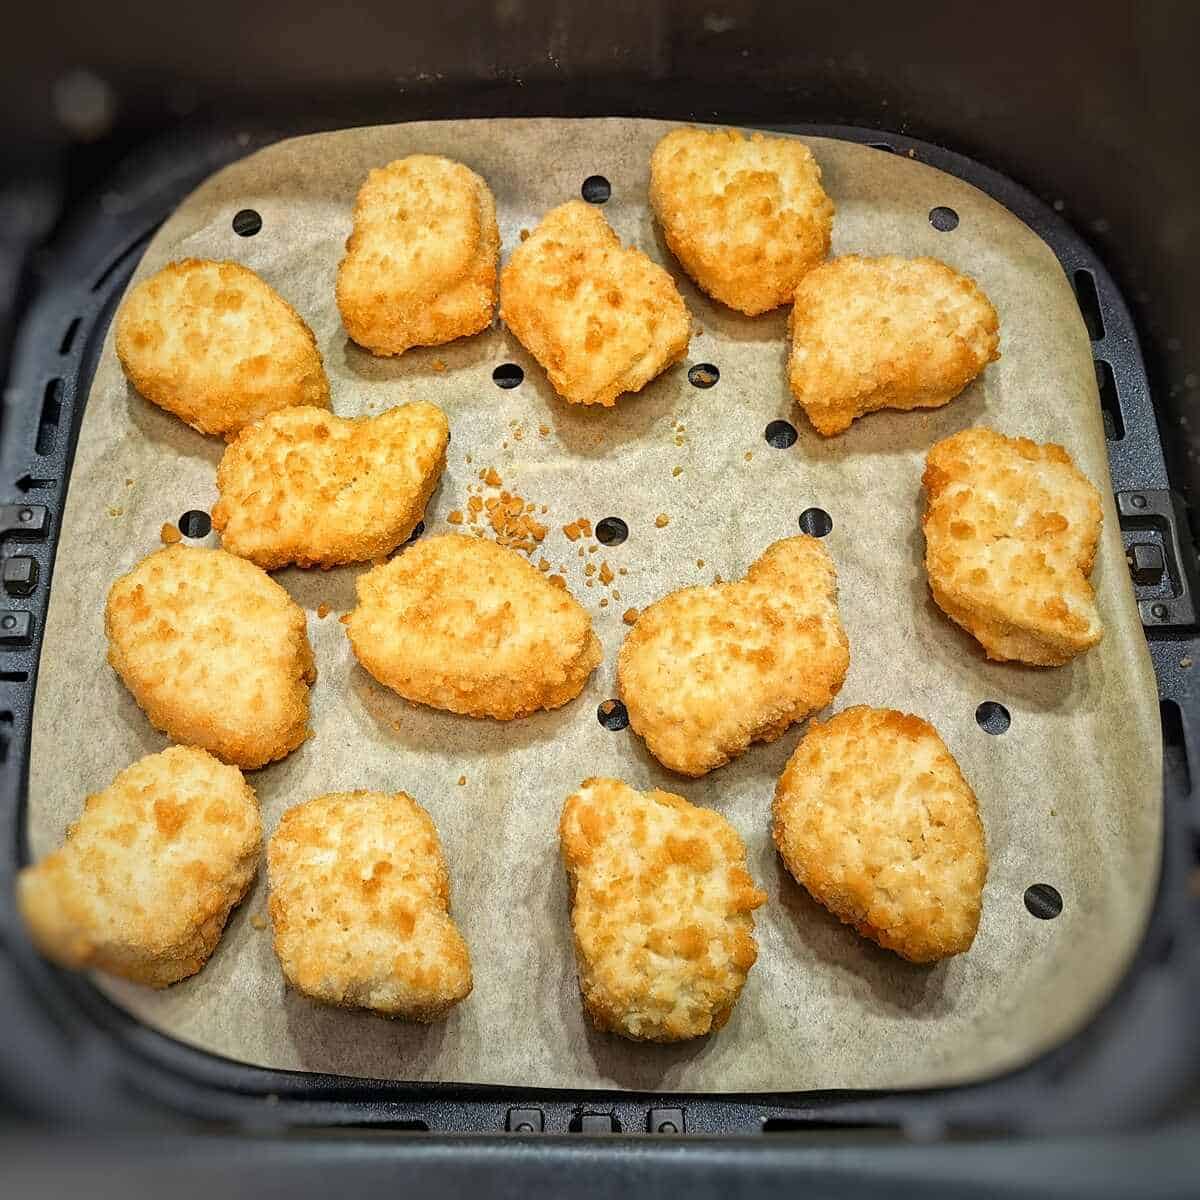 frozen chicken nuggets inside a lined air fryer basket